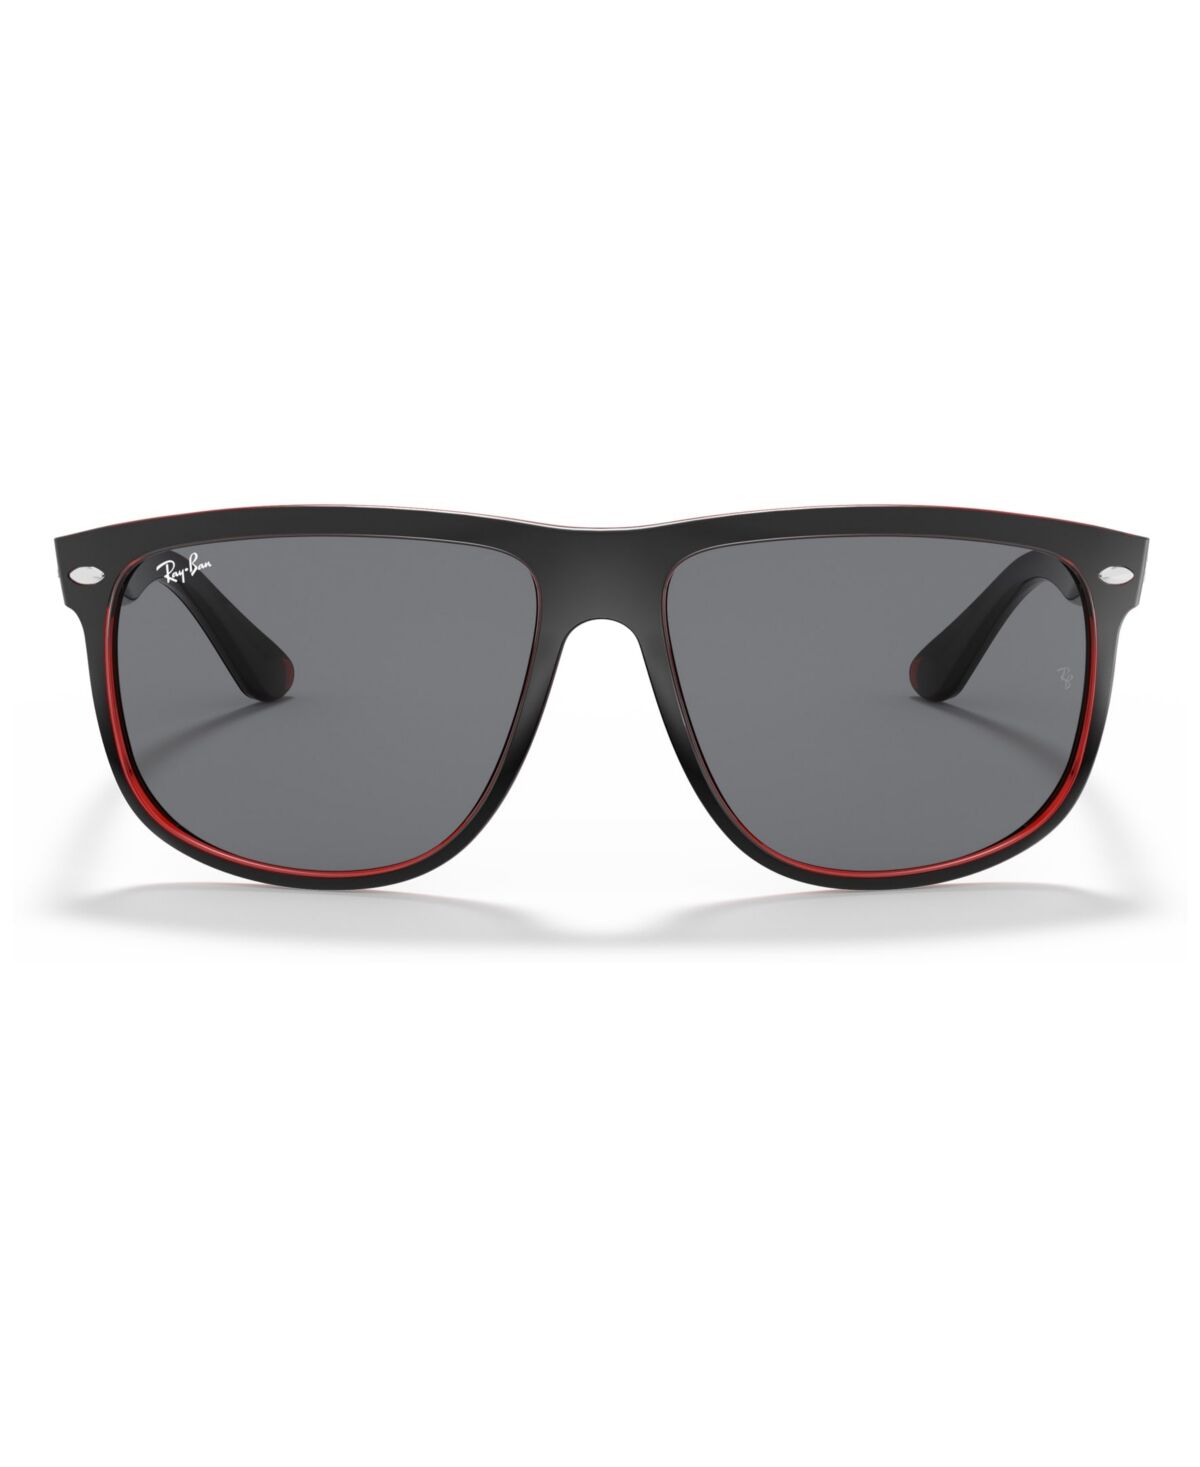 Ray-Ban Sunglasses, RB4147 - BLACK/MIRROR RED/GREY